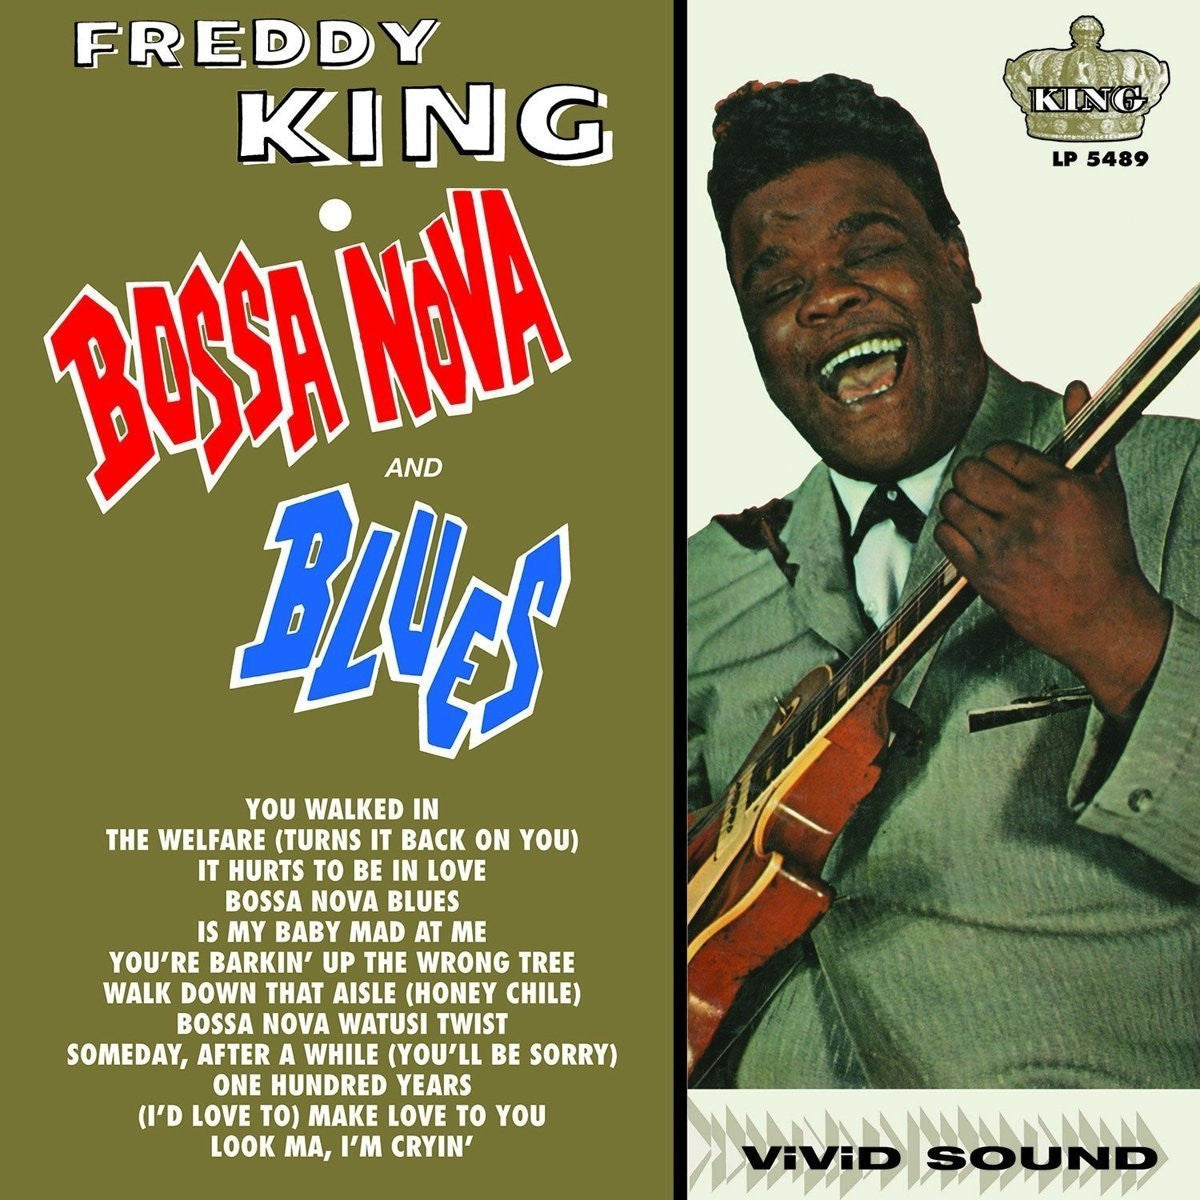 Freddy King - Bossa Nova y Blues - LP